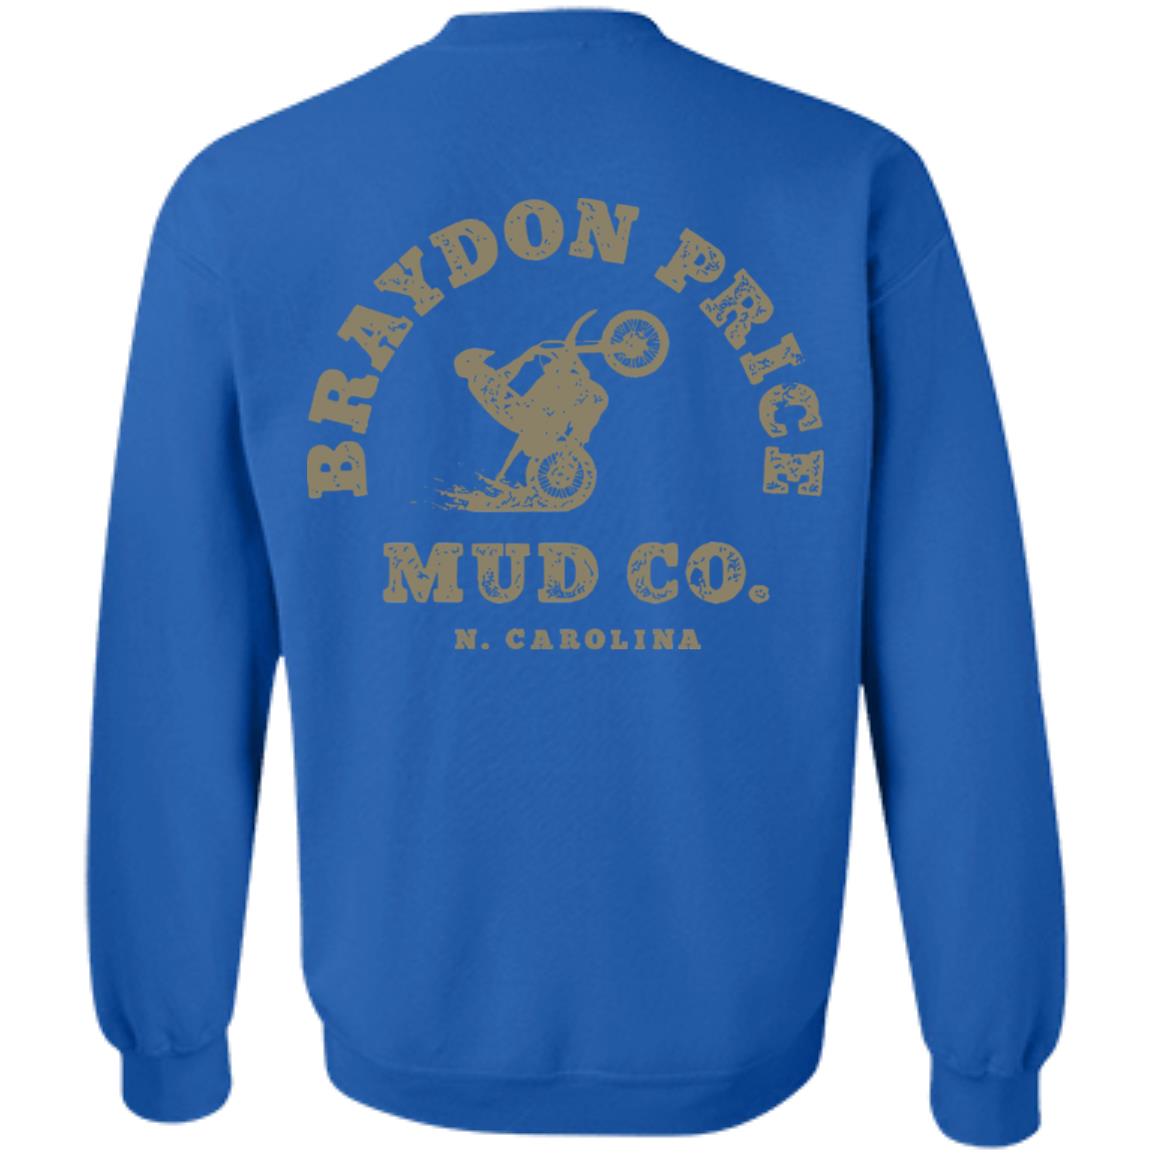 Braydon Price Merch Black Mud Co TShirt Merchip8